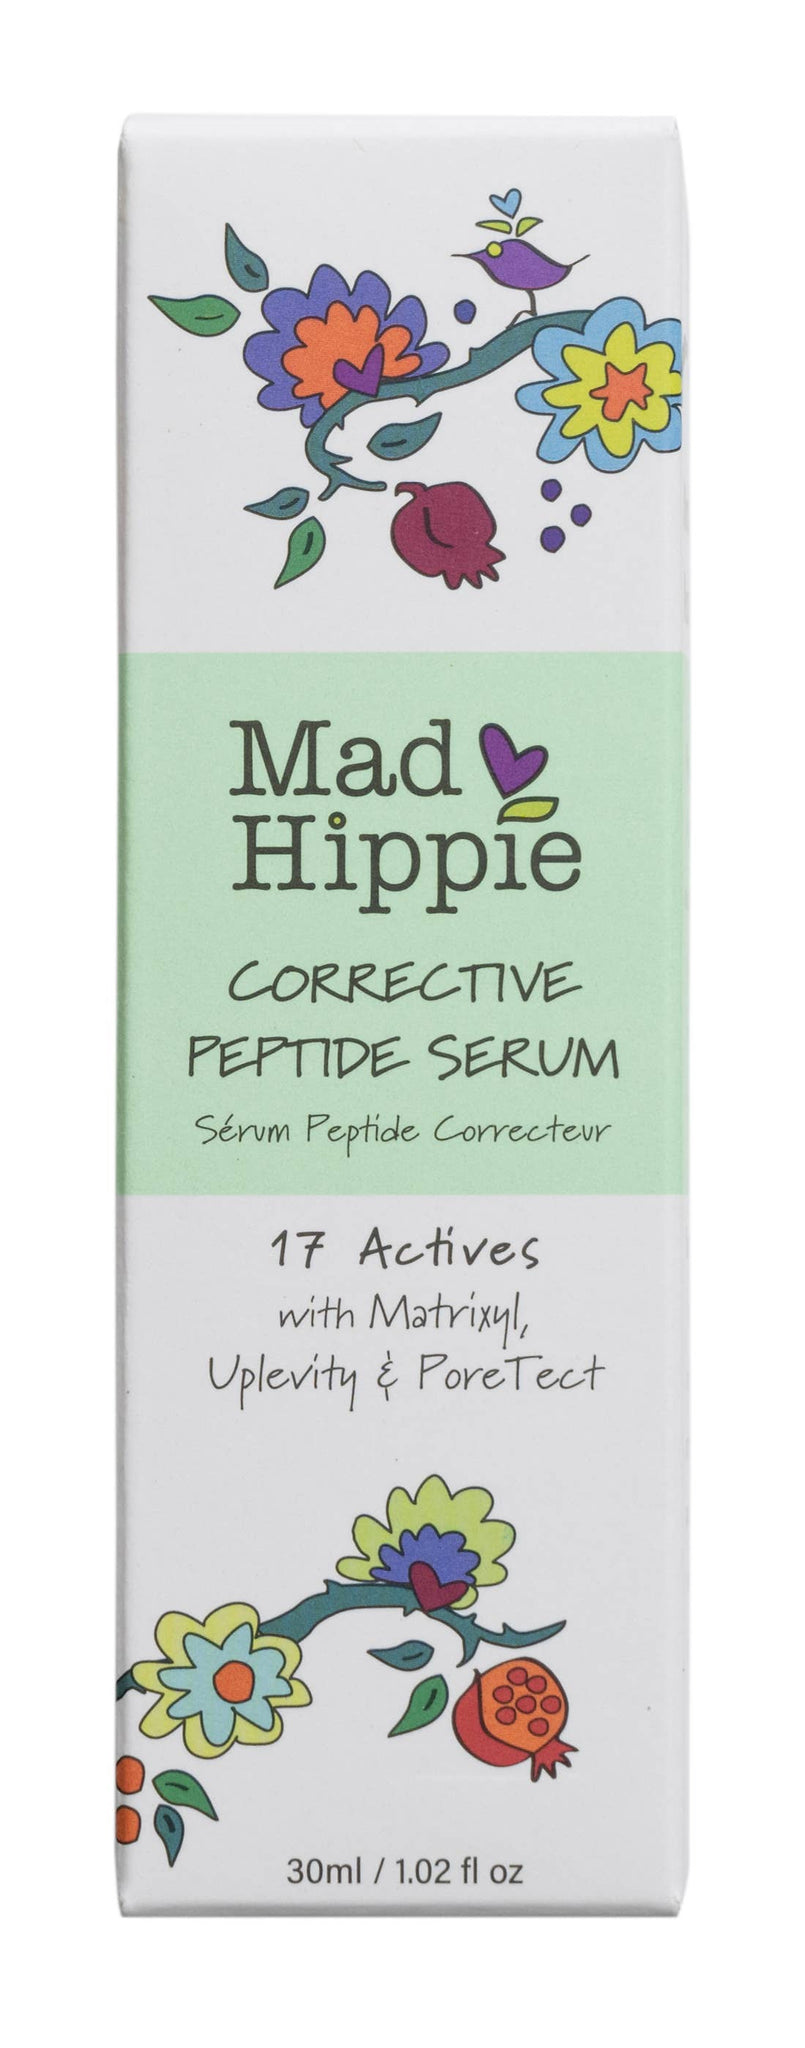 Corrective Peptide Serum